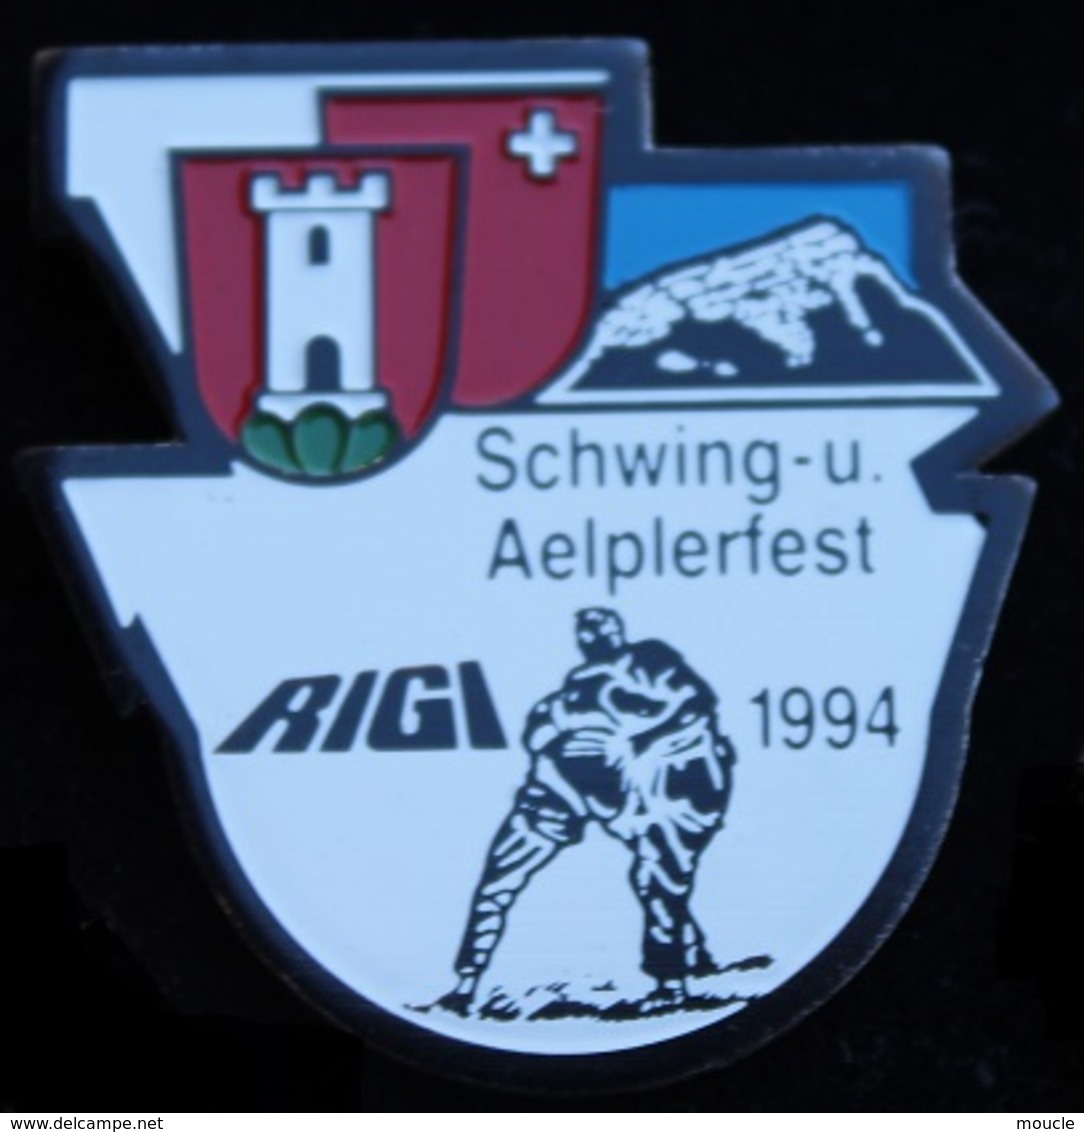 LUTTE SUISSE - LUTTEURS - SCHWING-U. - AELPERFEST - RIGI - 1994 - URI - SCHWEIZ - SWISS - SWITZERLAND -    (21) - Lucha